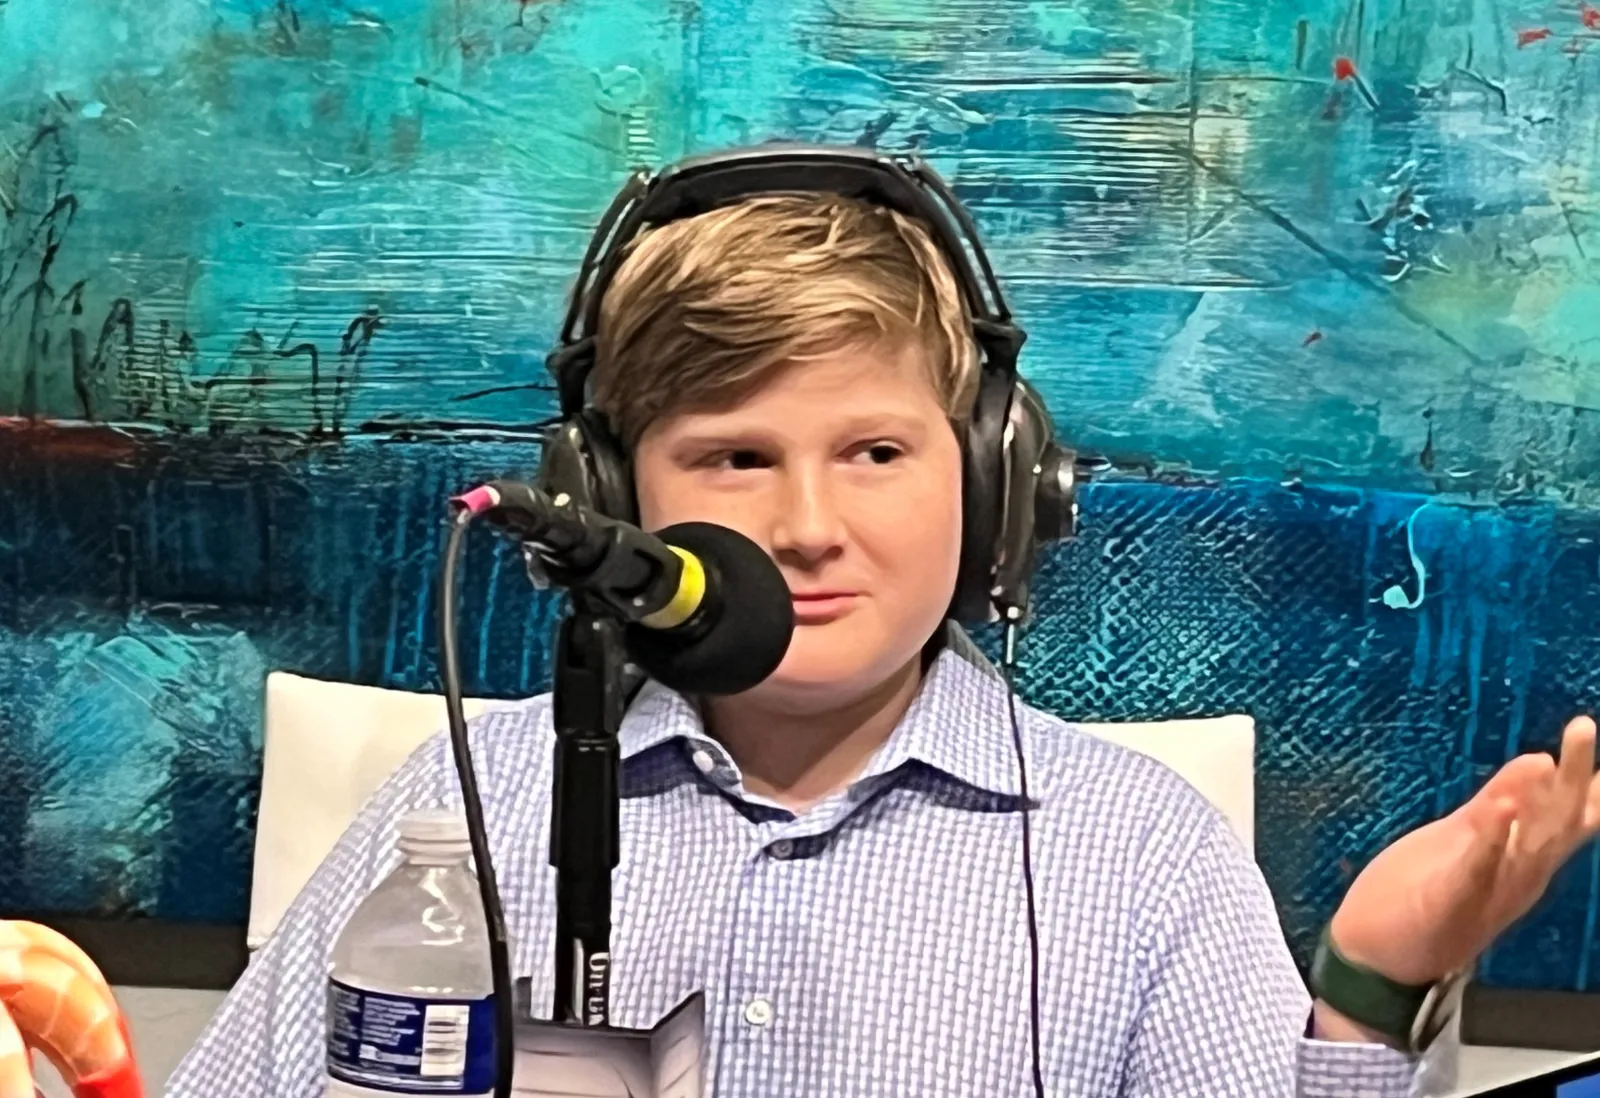 a boy wearing headphones